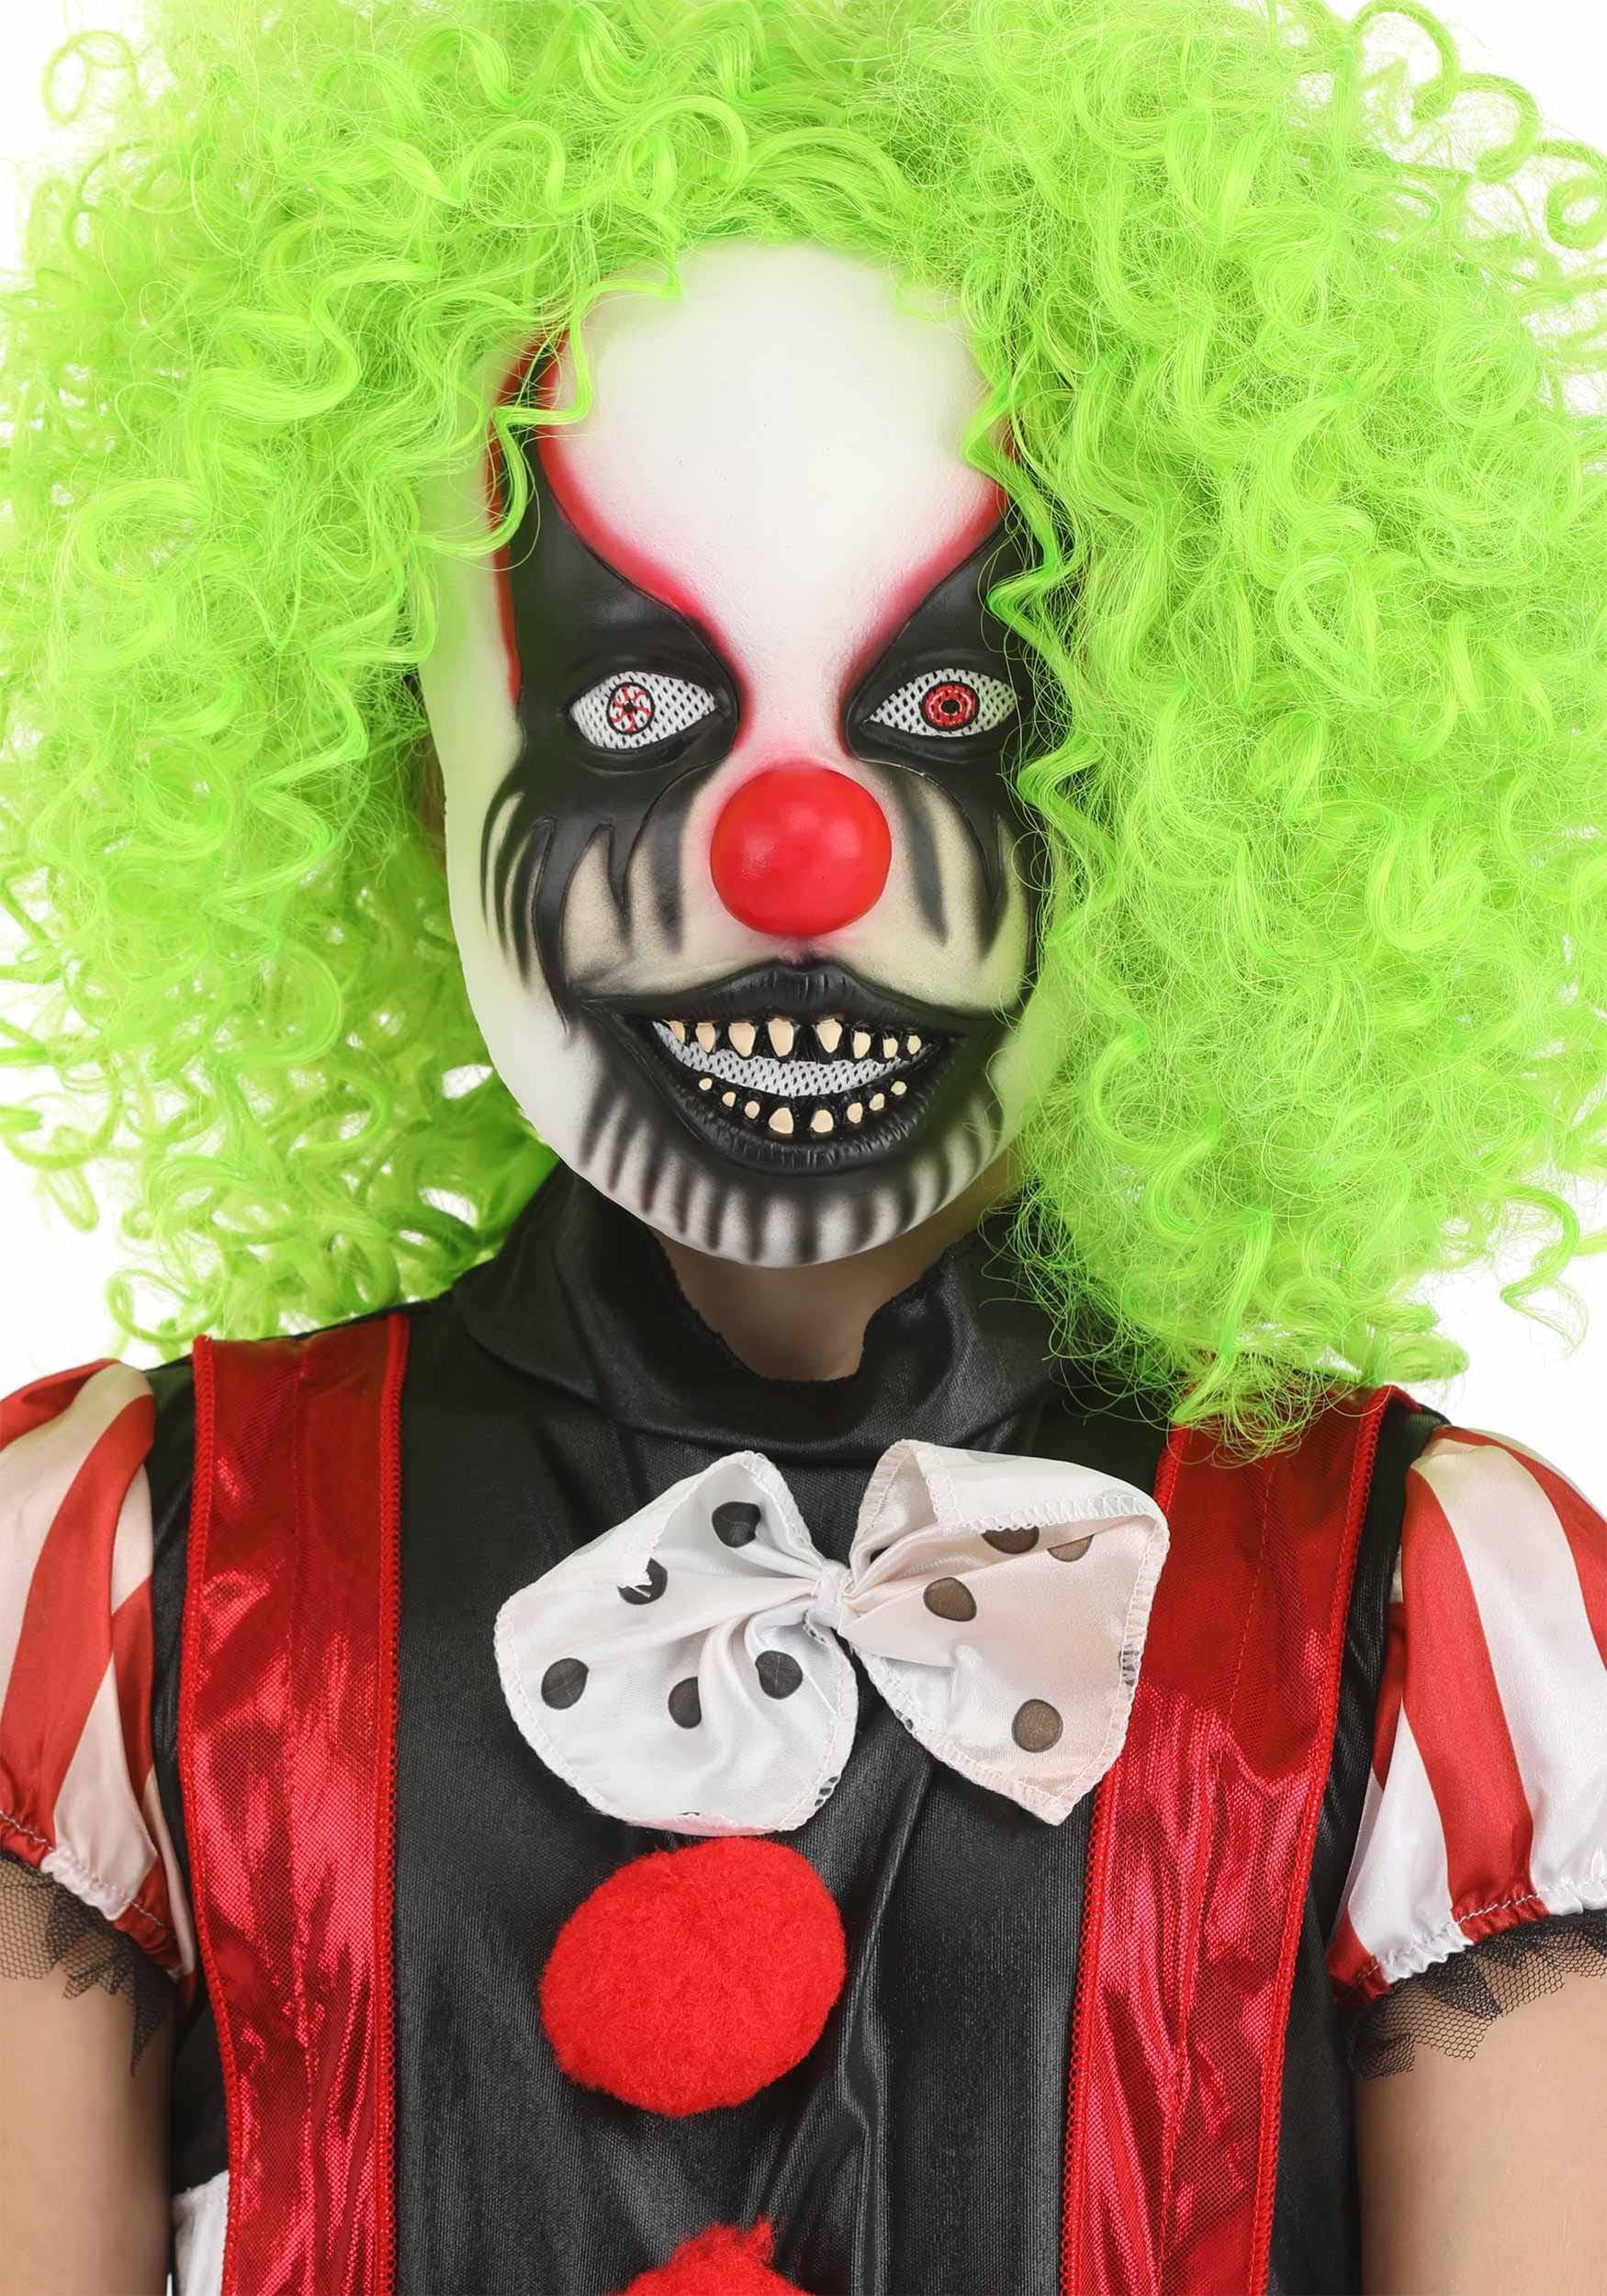 Kid's Creepy Clown Mask